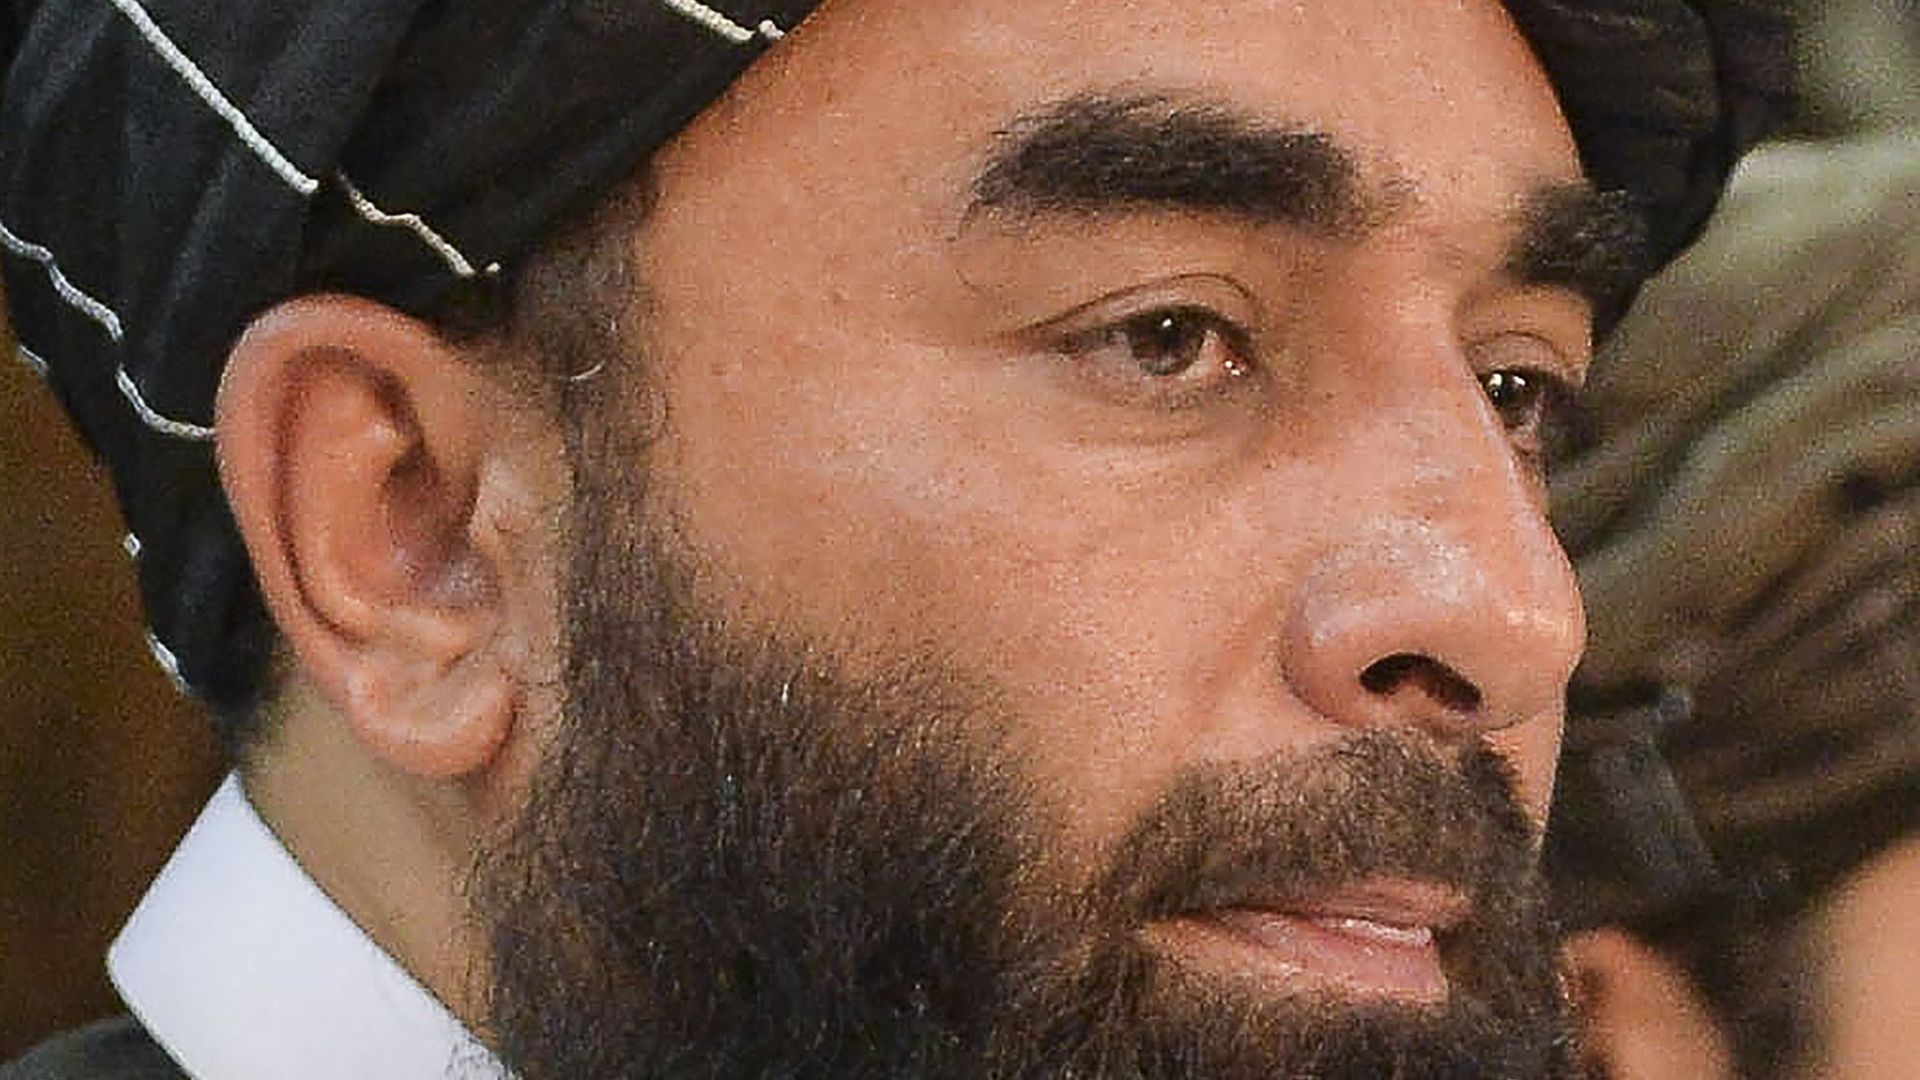 Le porte-parole des Talibans, Zabihullah Mujahid, lors de la conférence de presse à Kaboul ce mardi 17 août